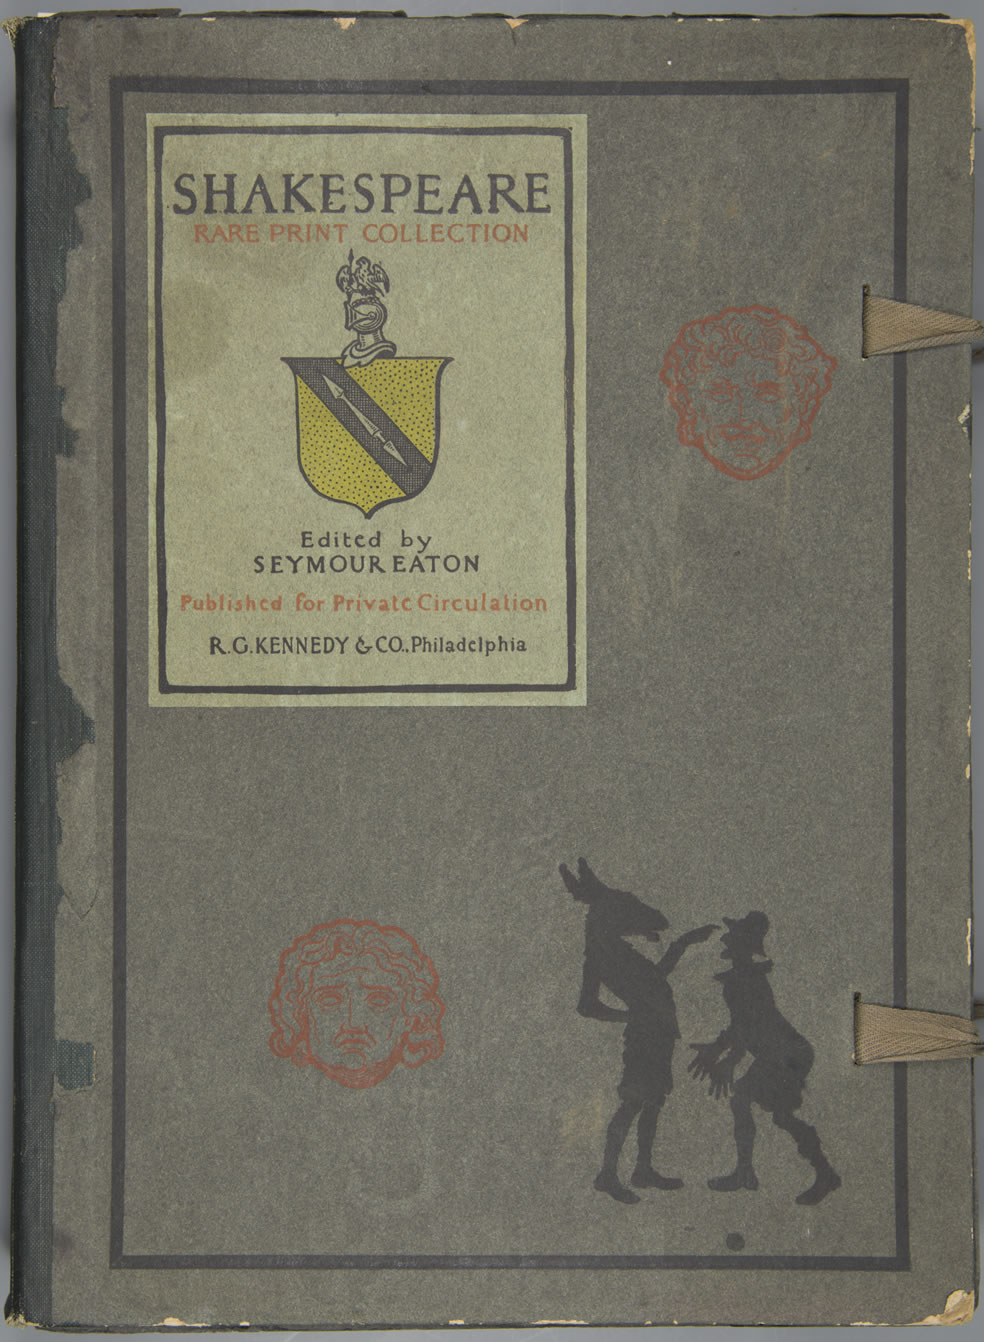 Shakespeare rare print collection